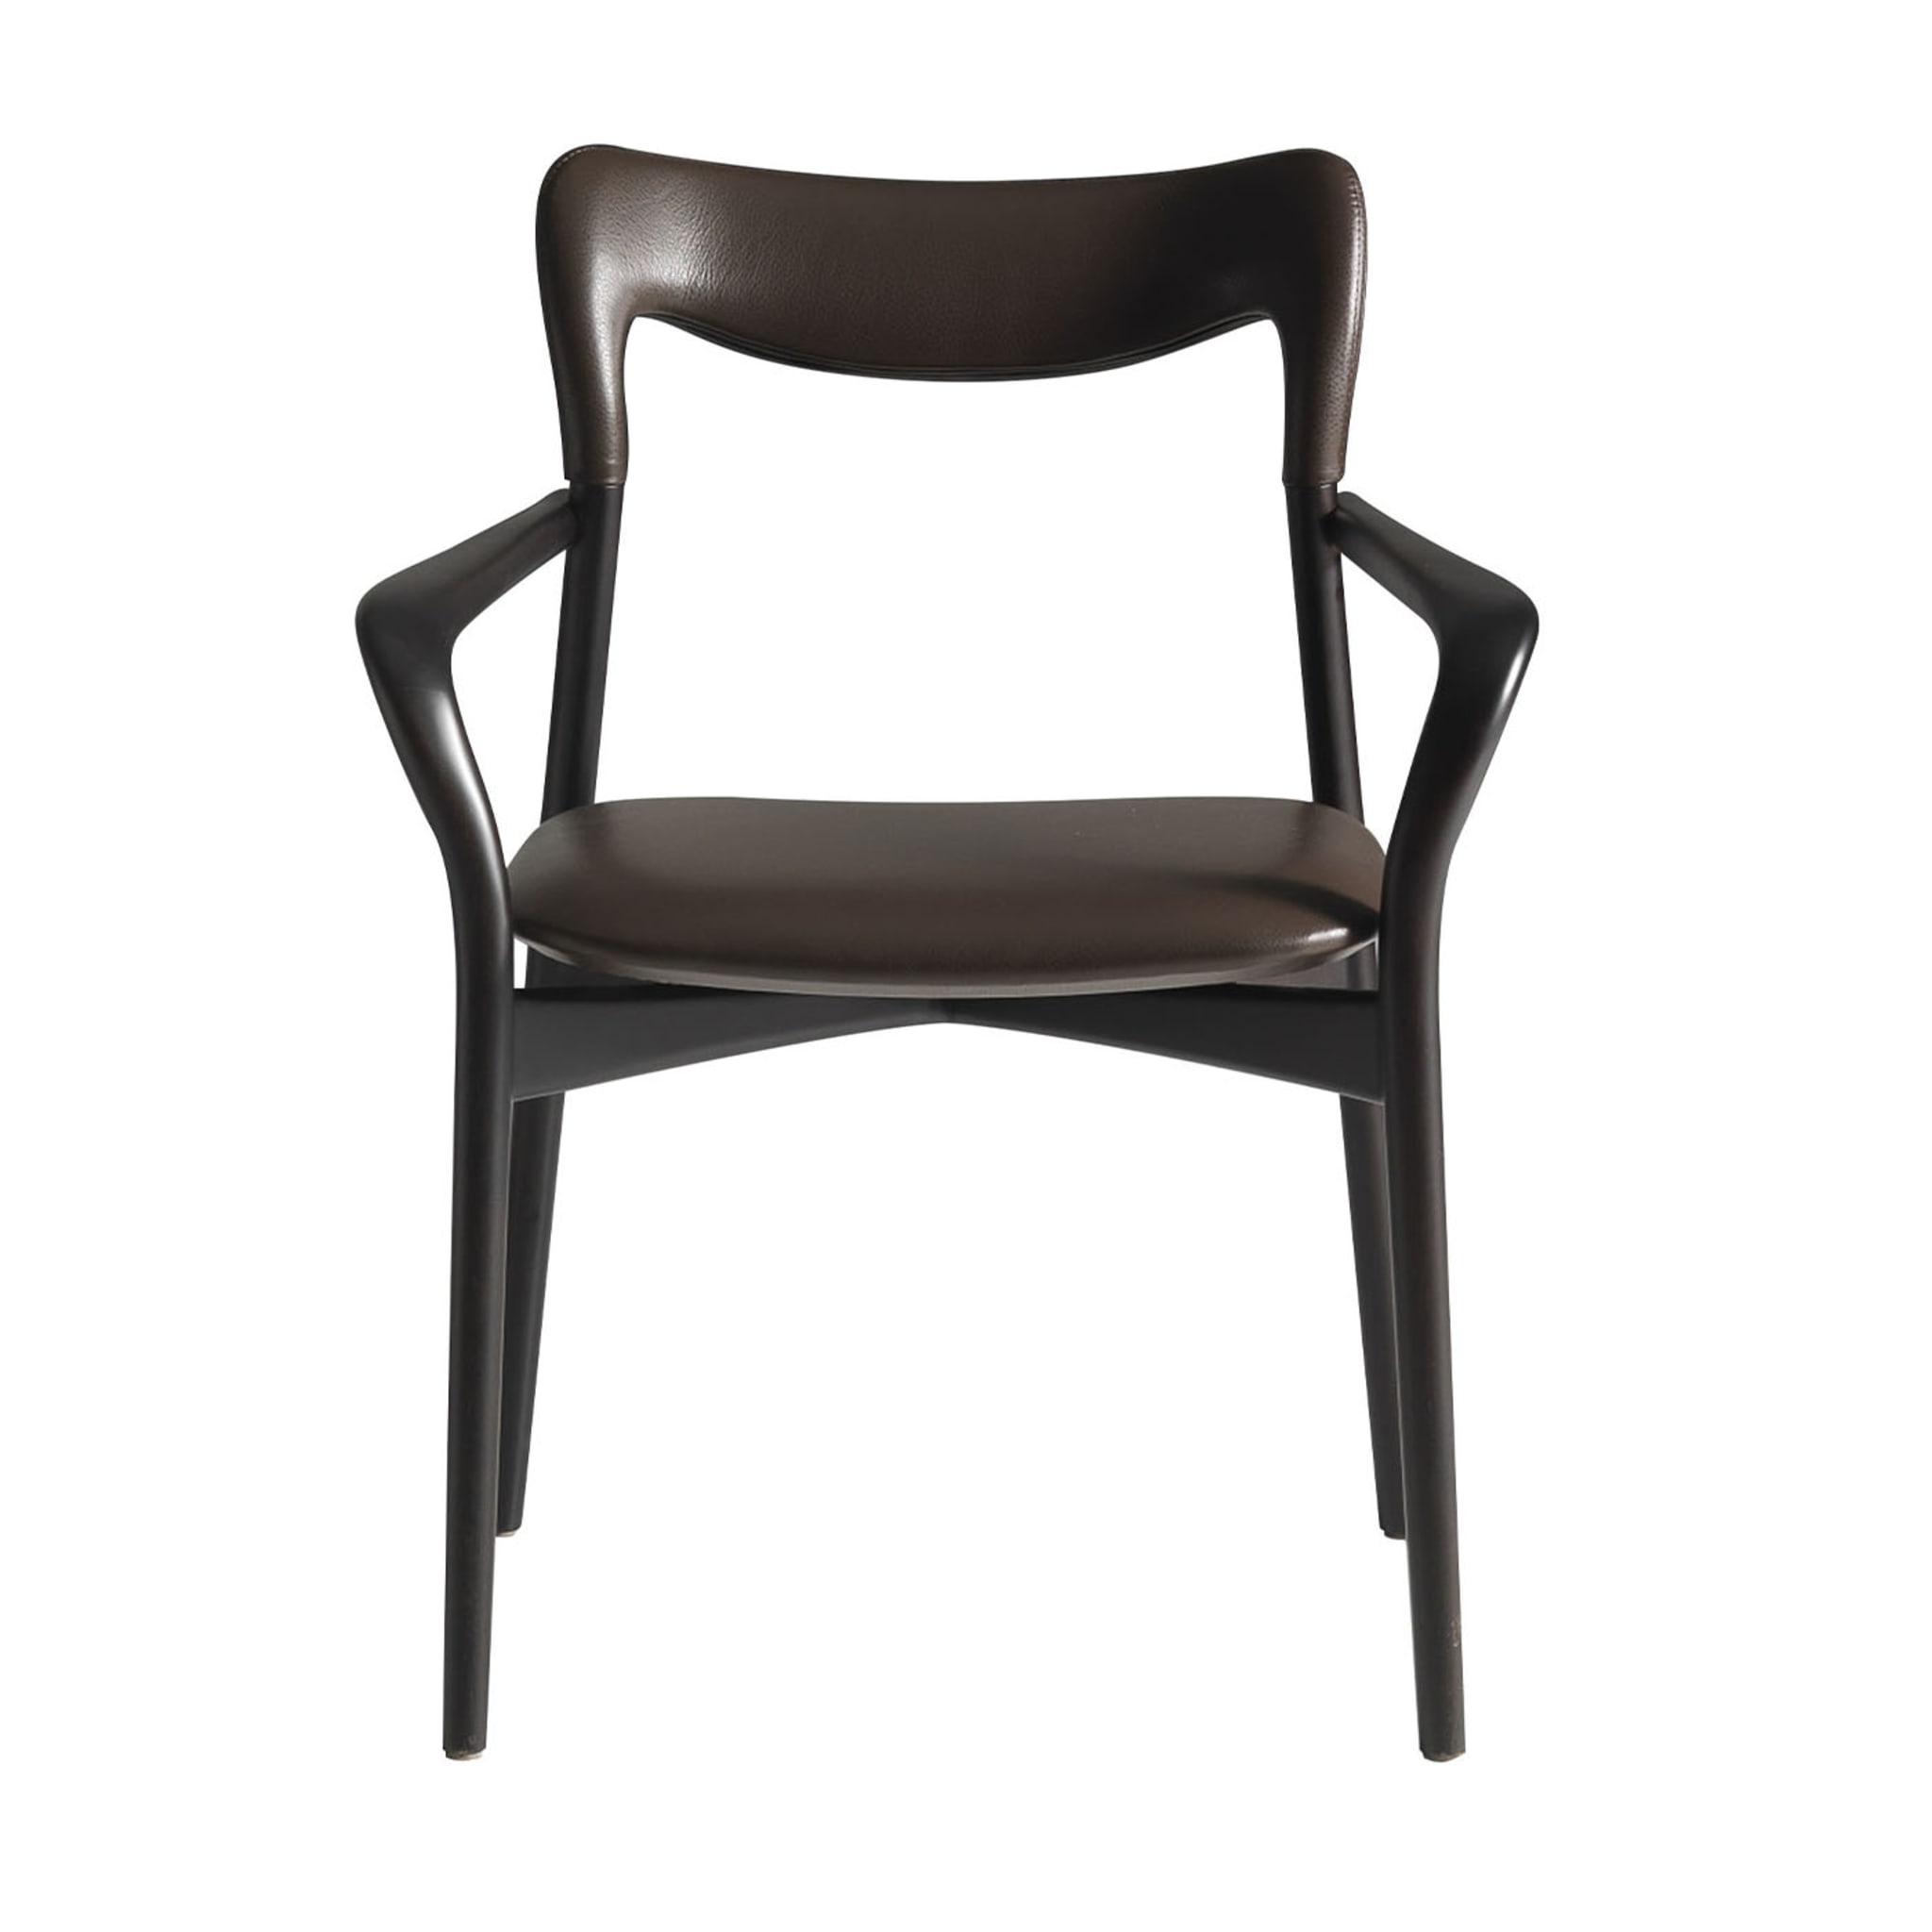 Achille Dark Leather Chair - Main view